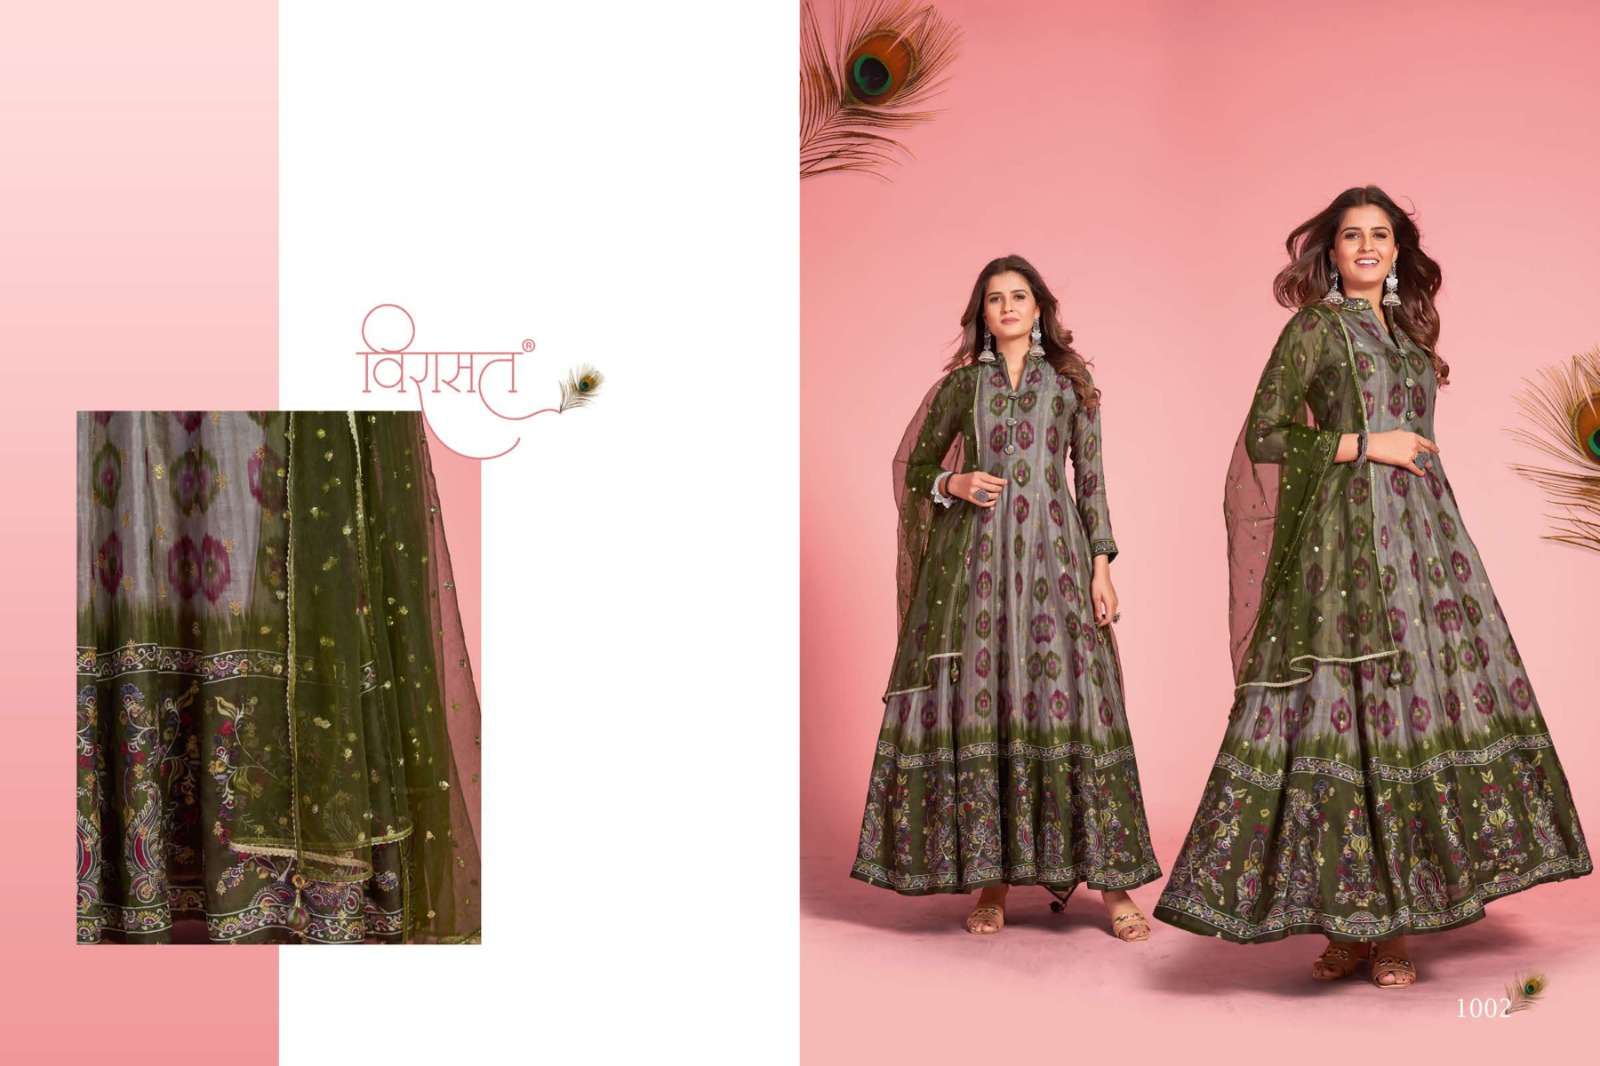 virasat kalamkari 1001-1003 series exclusive designer gown online supplier surat